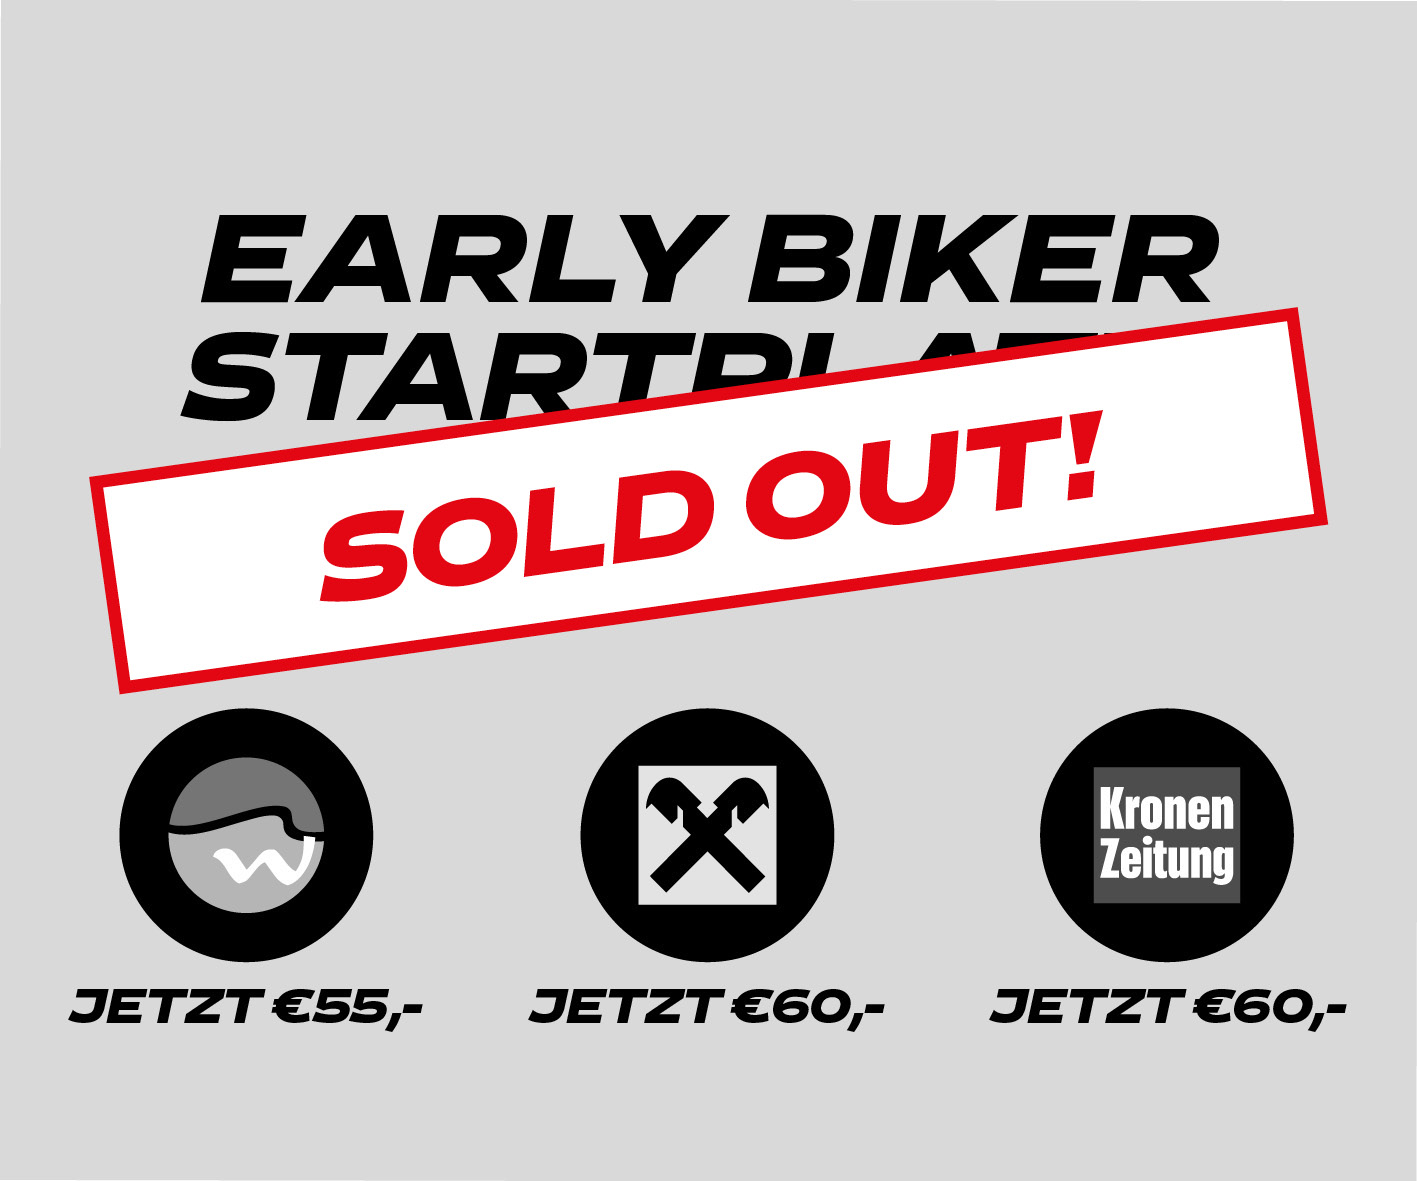 Early Biker Startplatz - Sold Out